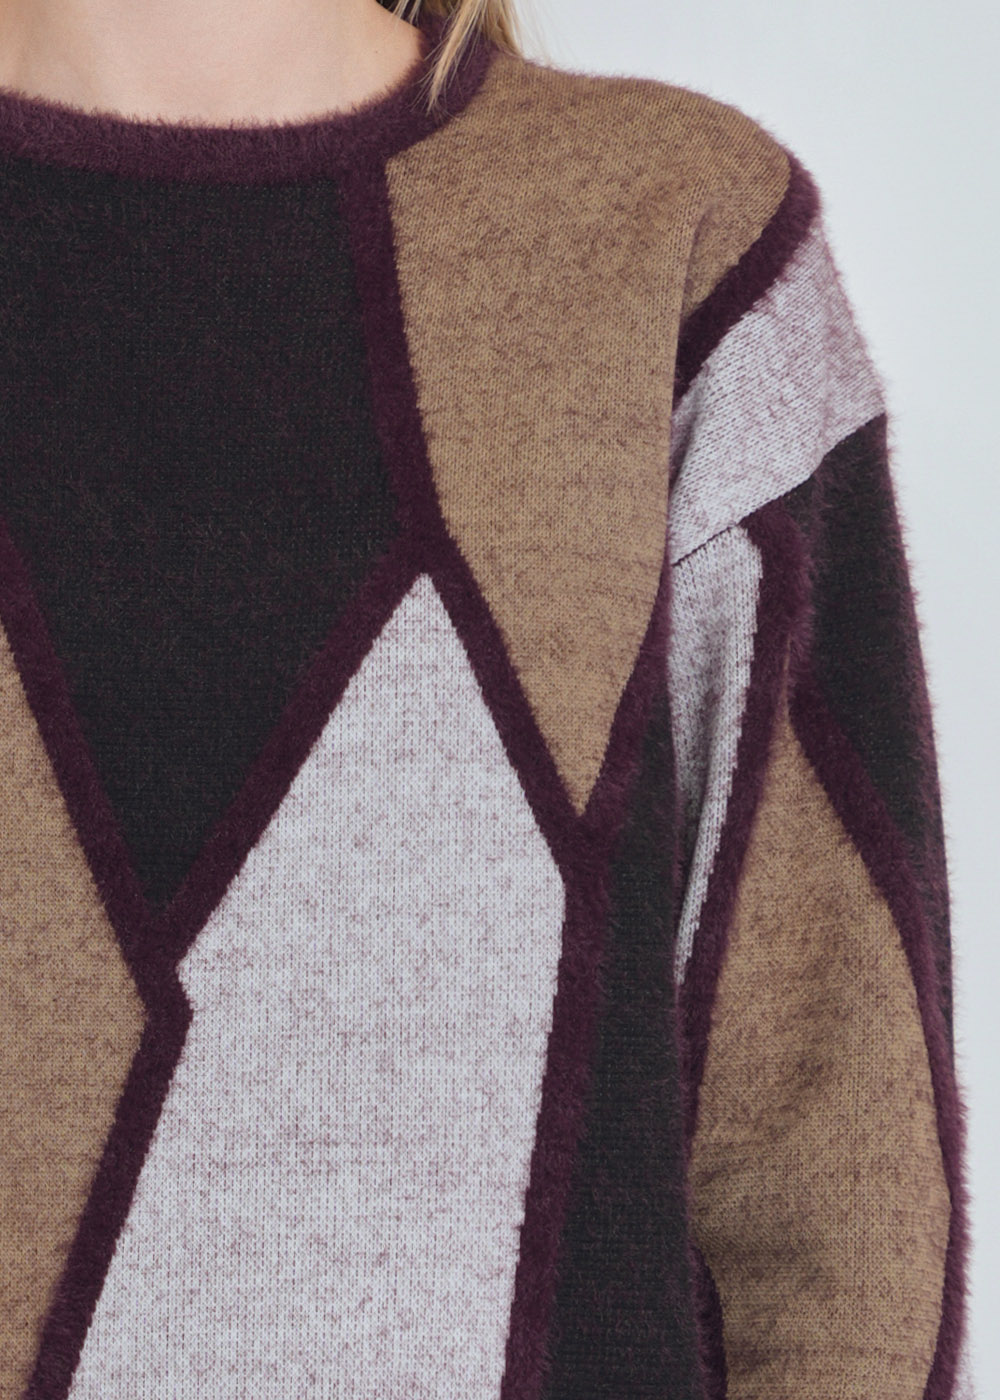 Mixed Hue Burgundy Sweater